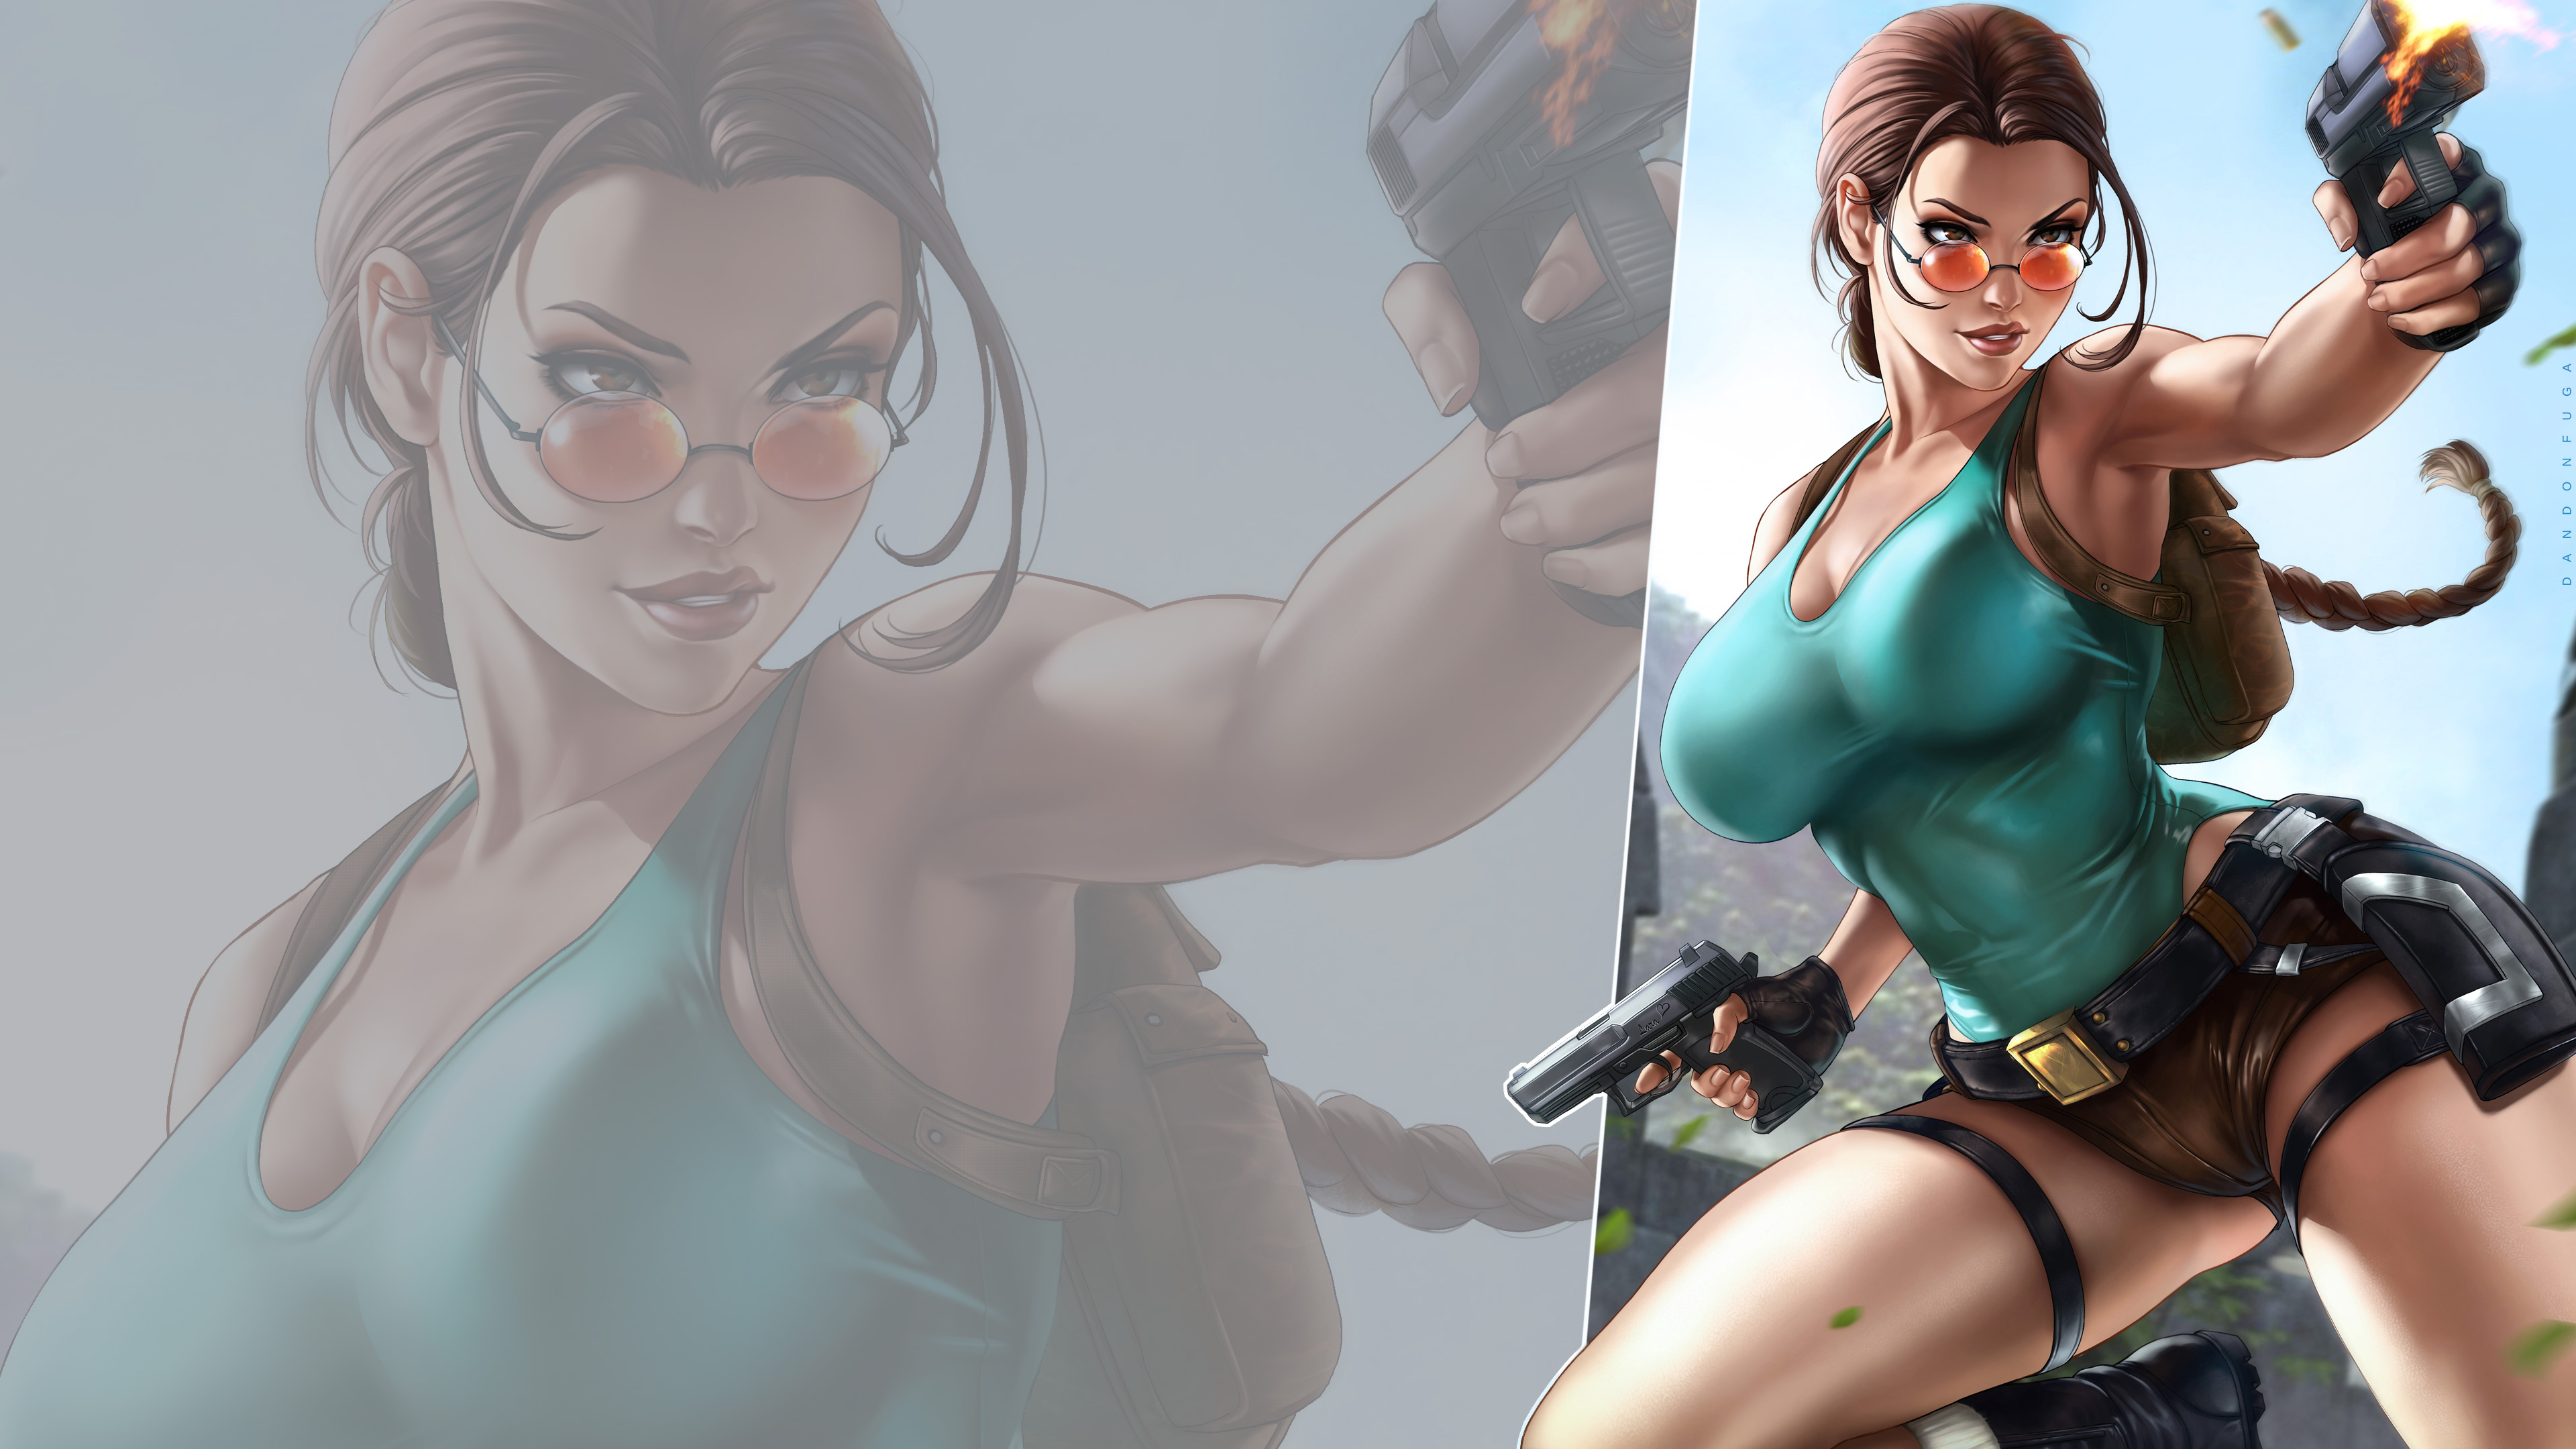 Raider gun fan art video games PC gaming video game girls video game charac...